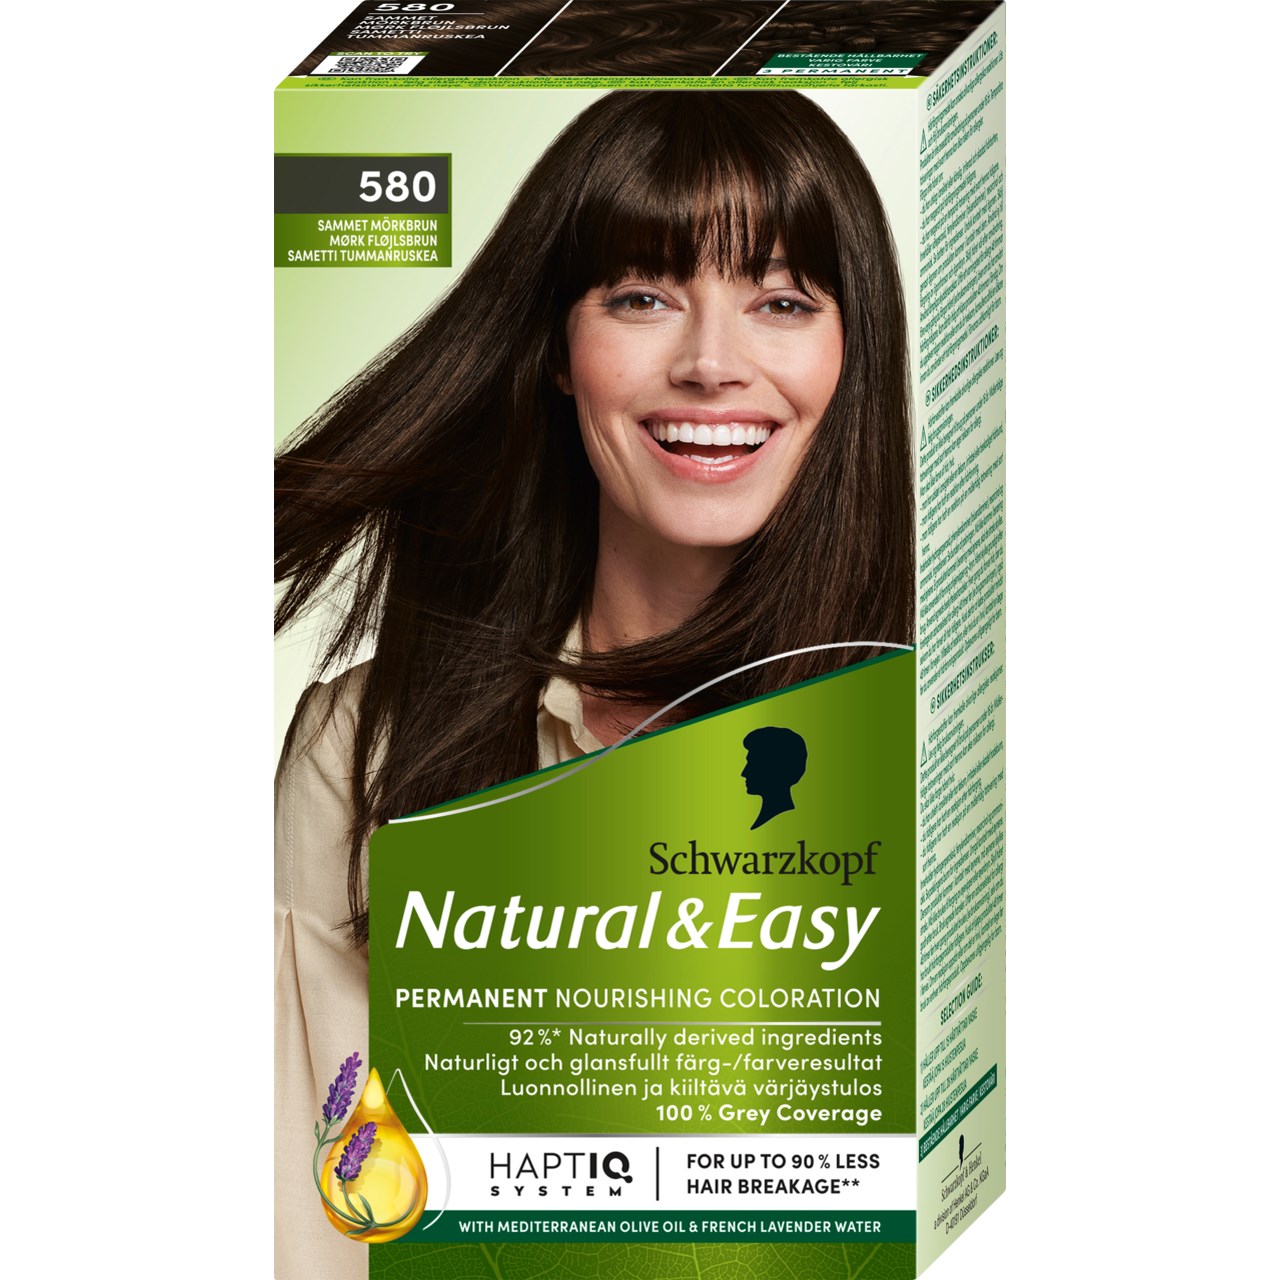 Bilde av Schwarzkopf Natural & Easy Hair Color 580 Sammet Mörkbrun